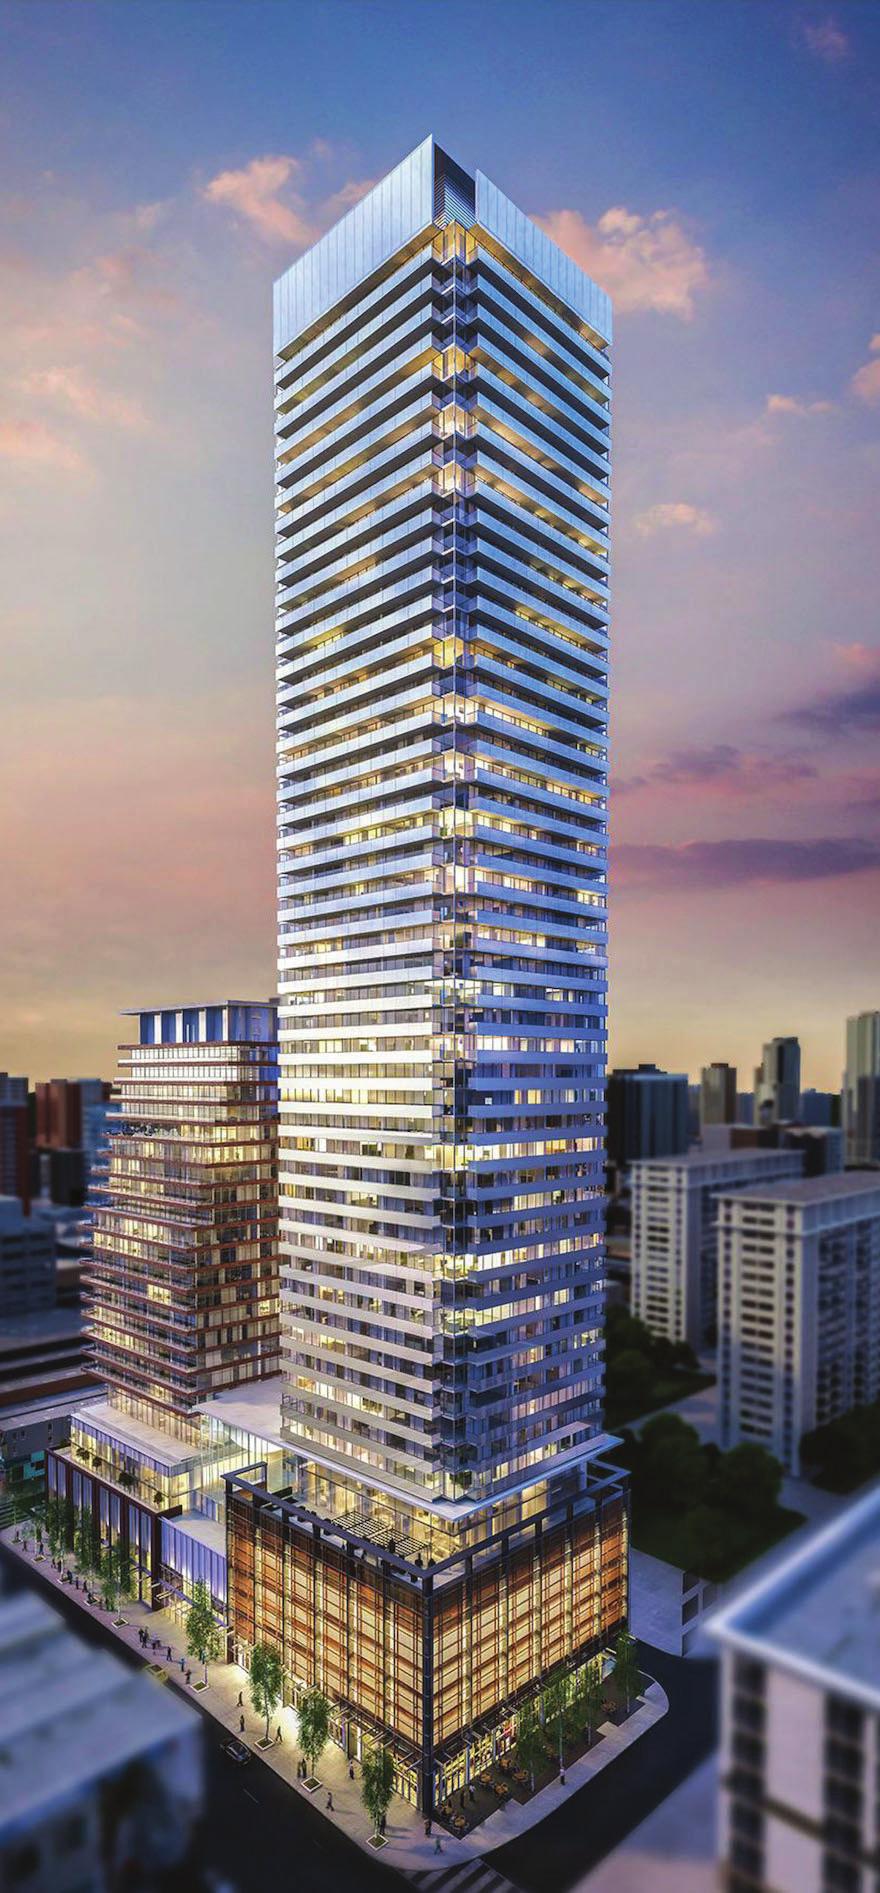 Condominium Units/ Stories Status 16 8 Elm 469 units 80 storeys 17 Eaton Chelsea Redevelopment 1,897 units 4 towers 18 415 Yonge